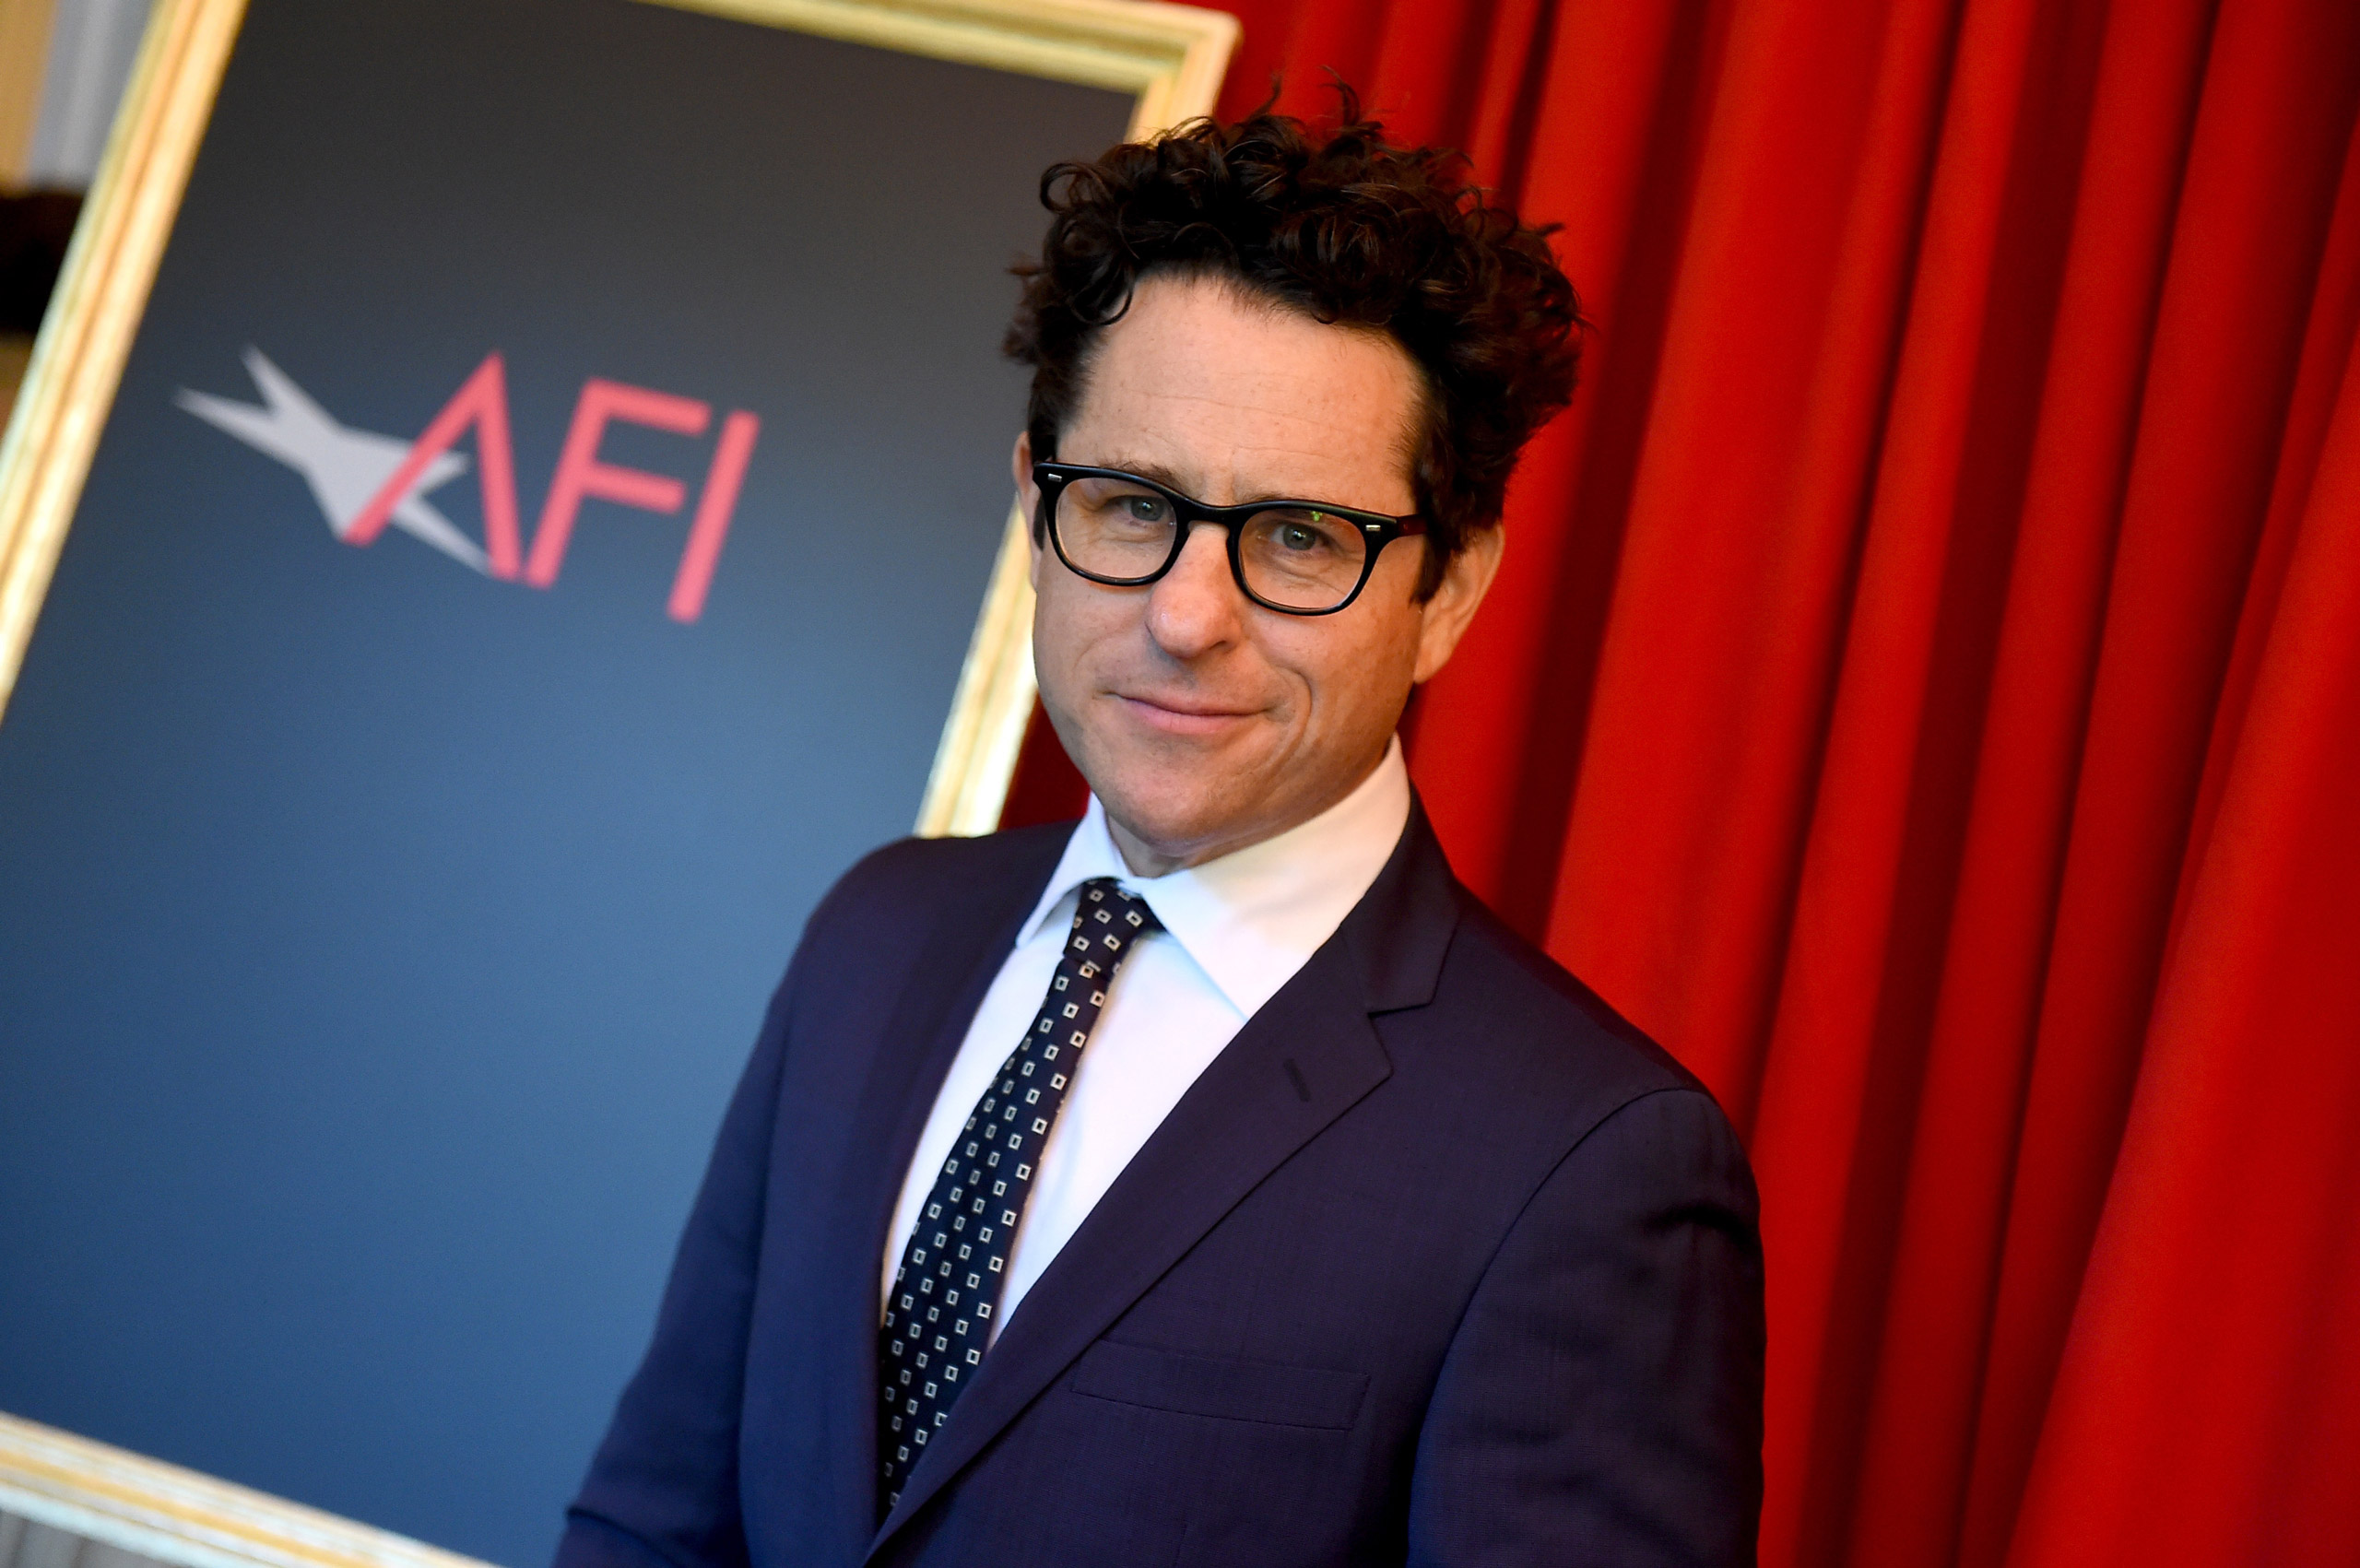 16th Annual AFI Awards - Red Carpet